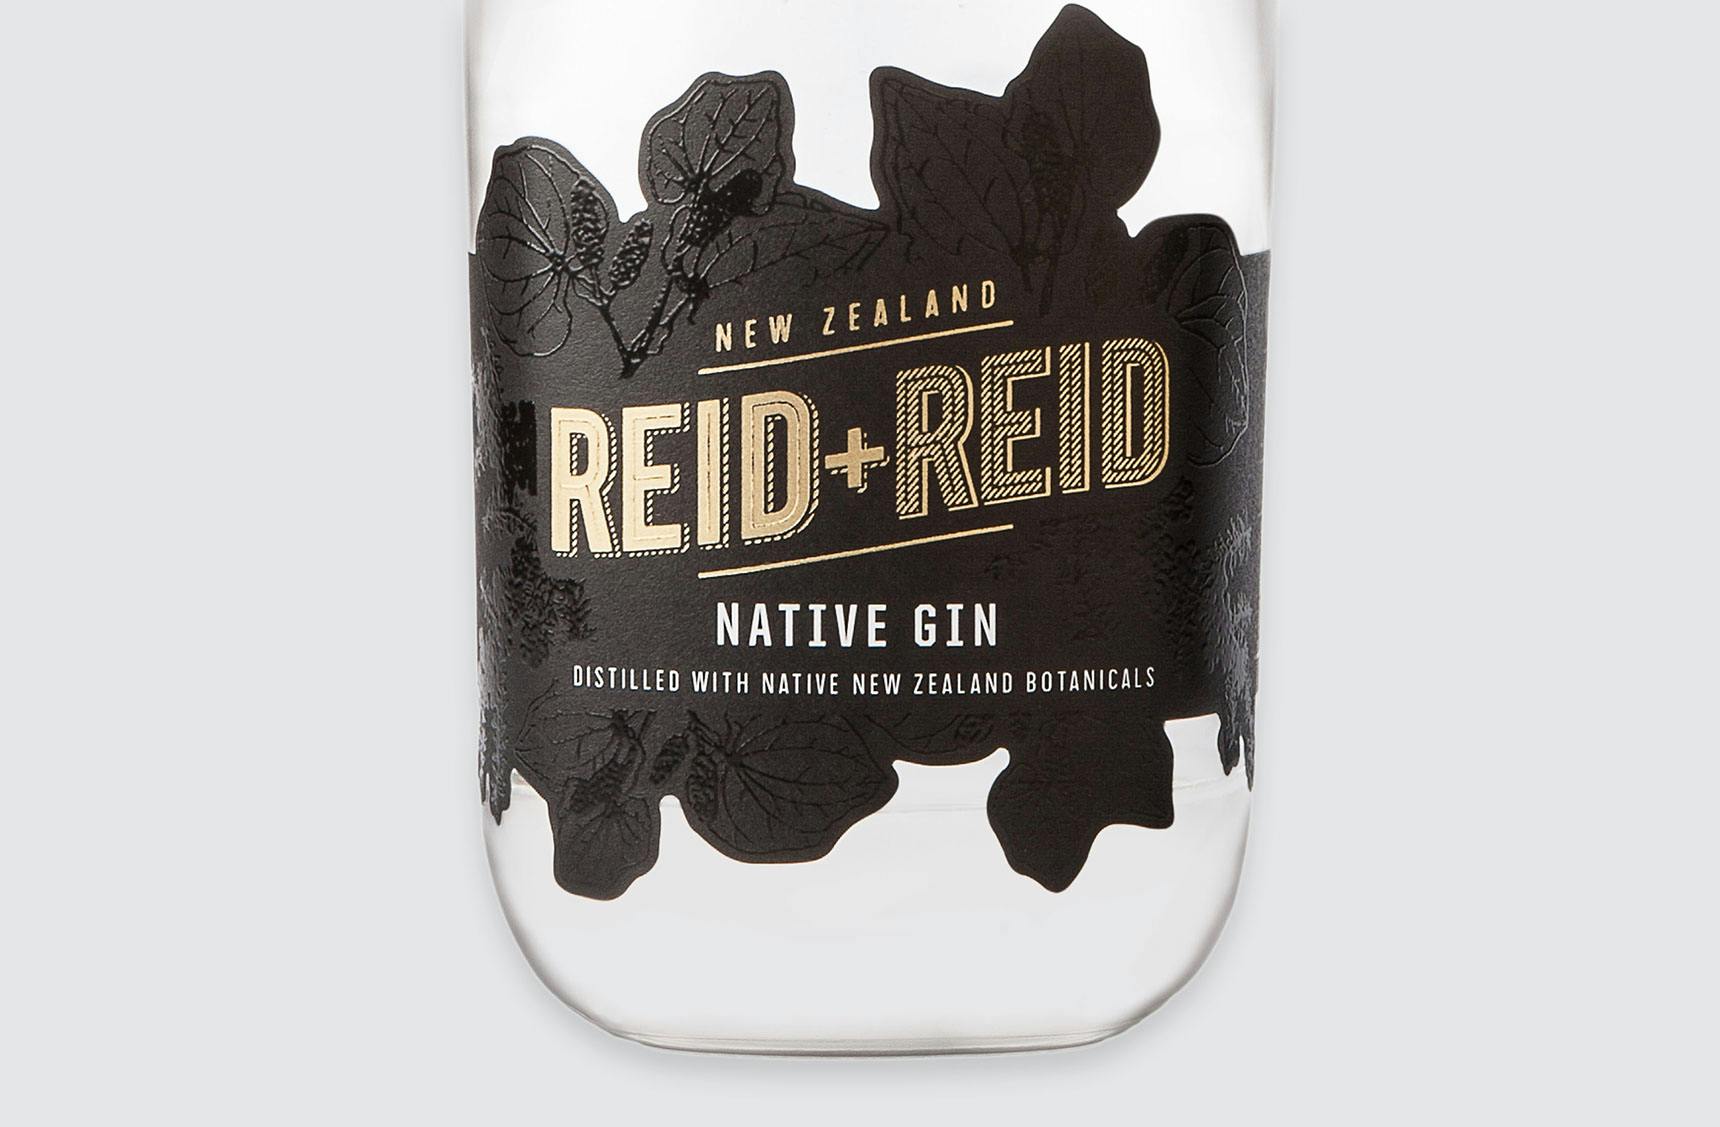 Reid And Reid Native Gin Label Design